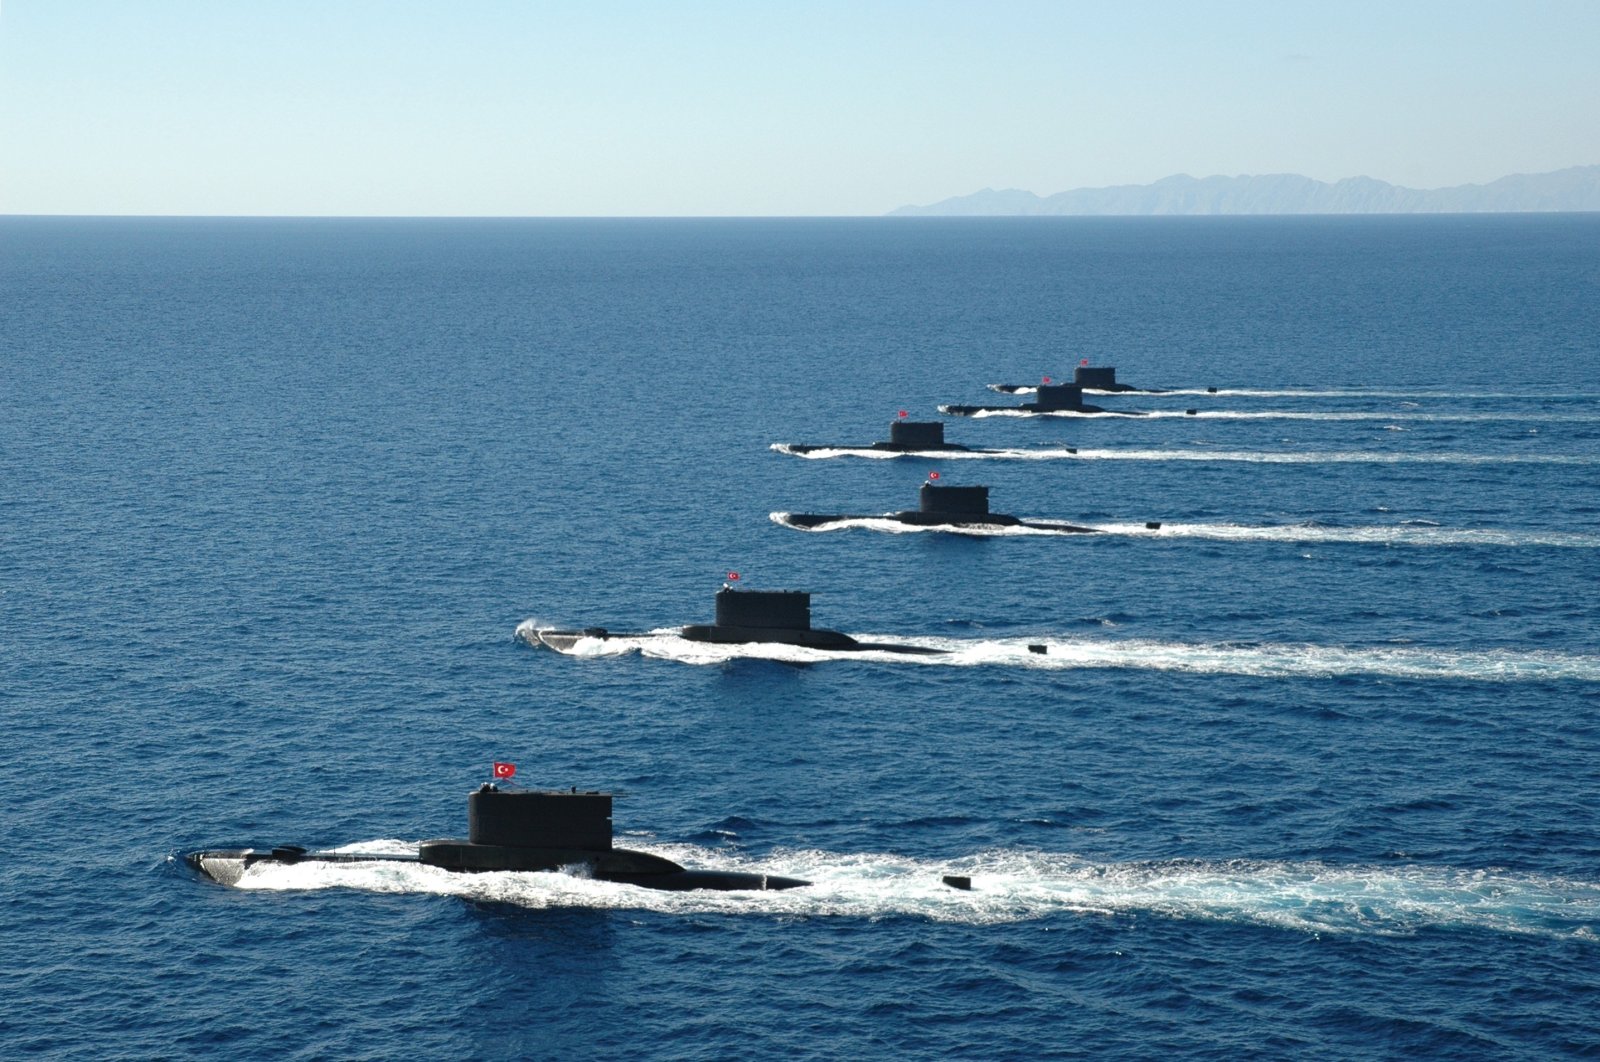 STM Turki akan memamerkan platform angkatan laut, UAV di Expodefensa 2021